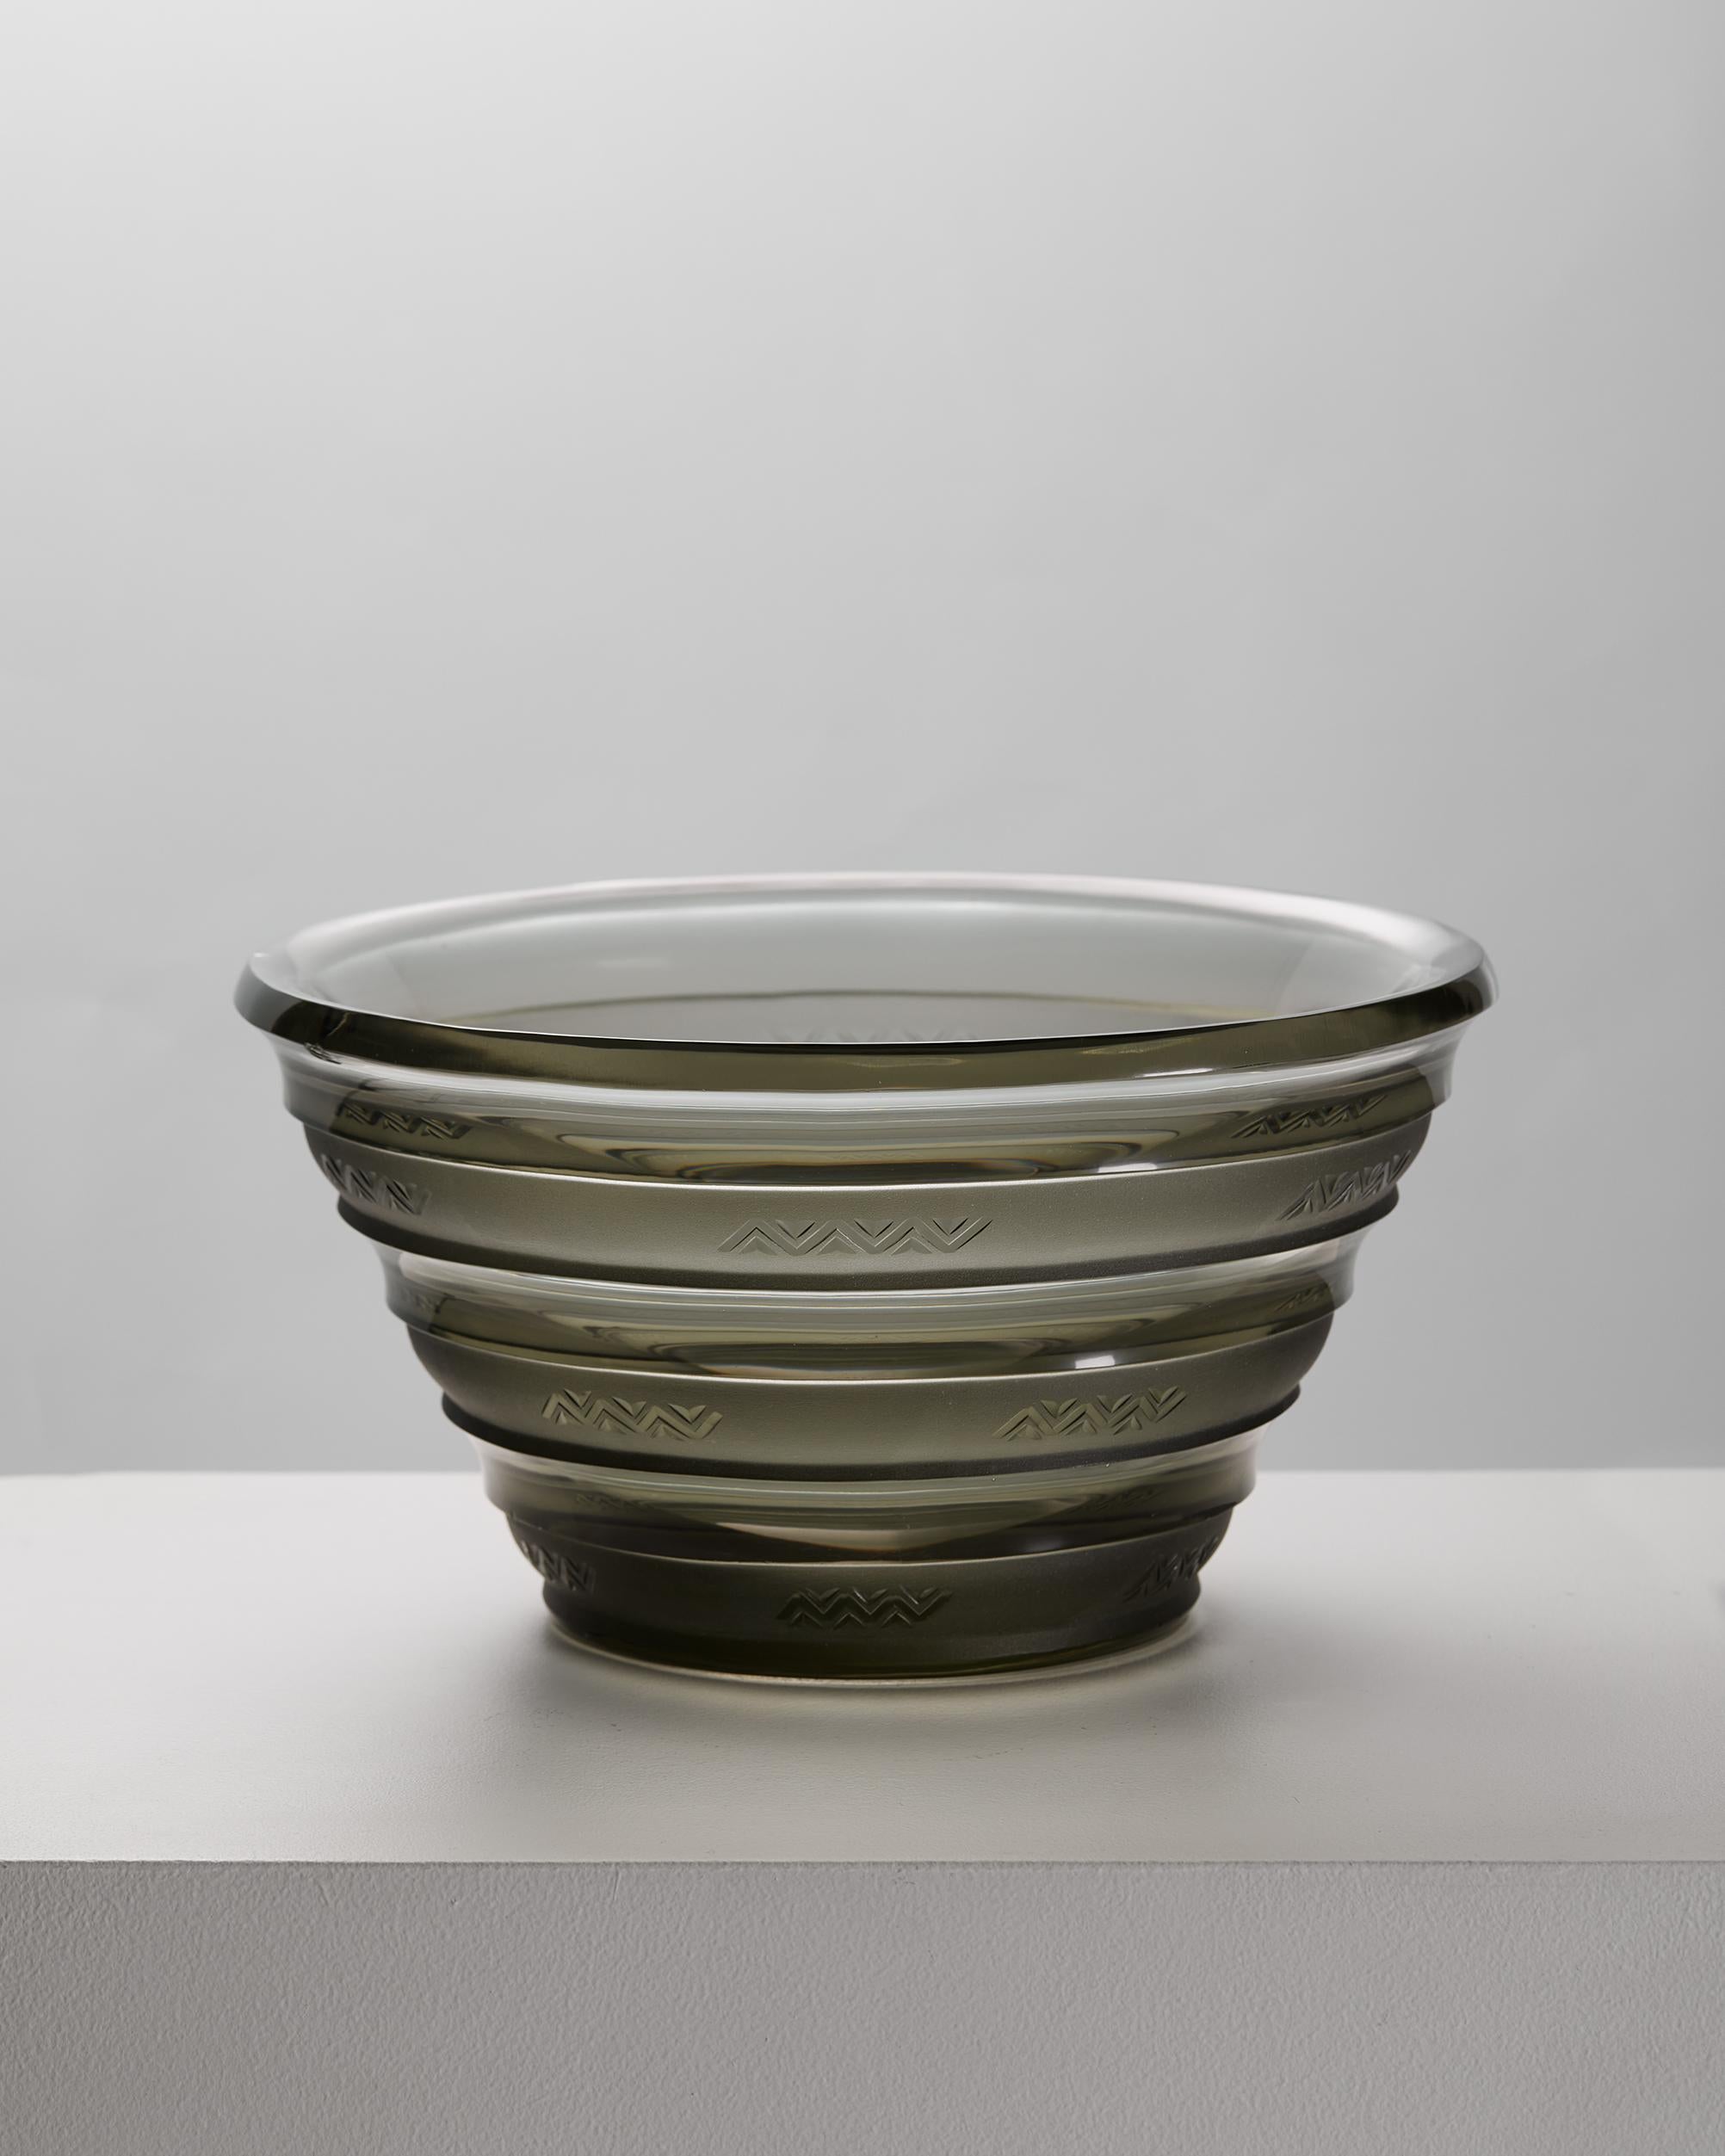 Bowl designed by Simon Gate for Orrefors,
Sweden, 1930.

Glass.

Signed.

Dimensions:
H: 15 cm / 6''
Diameter: 28 cm / 11''